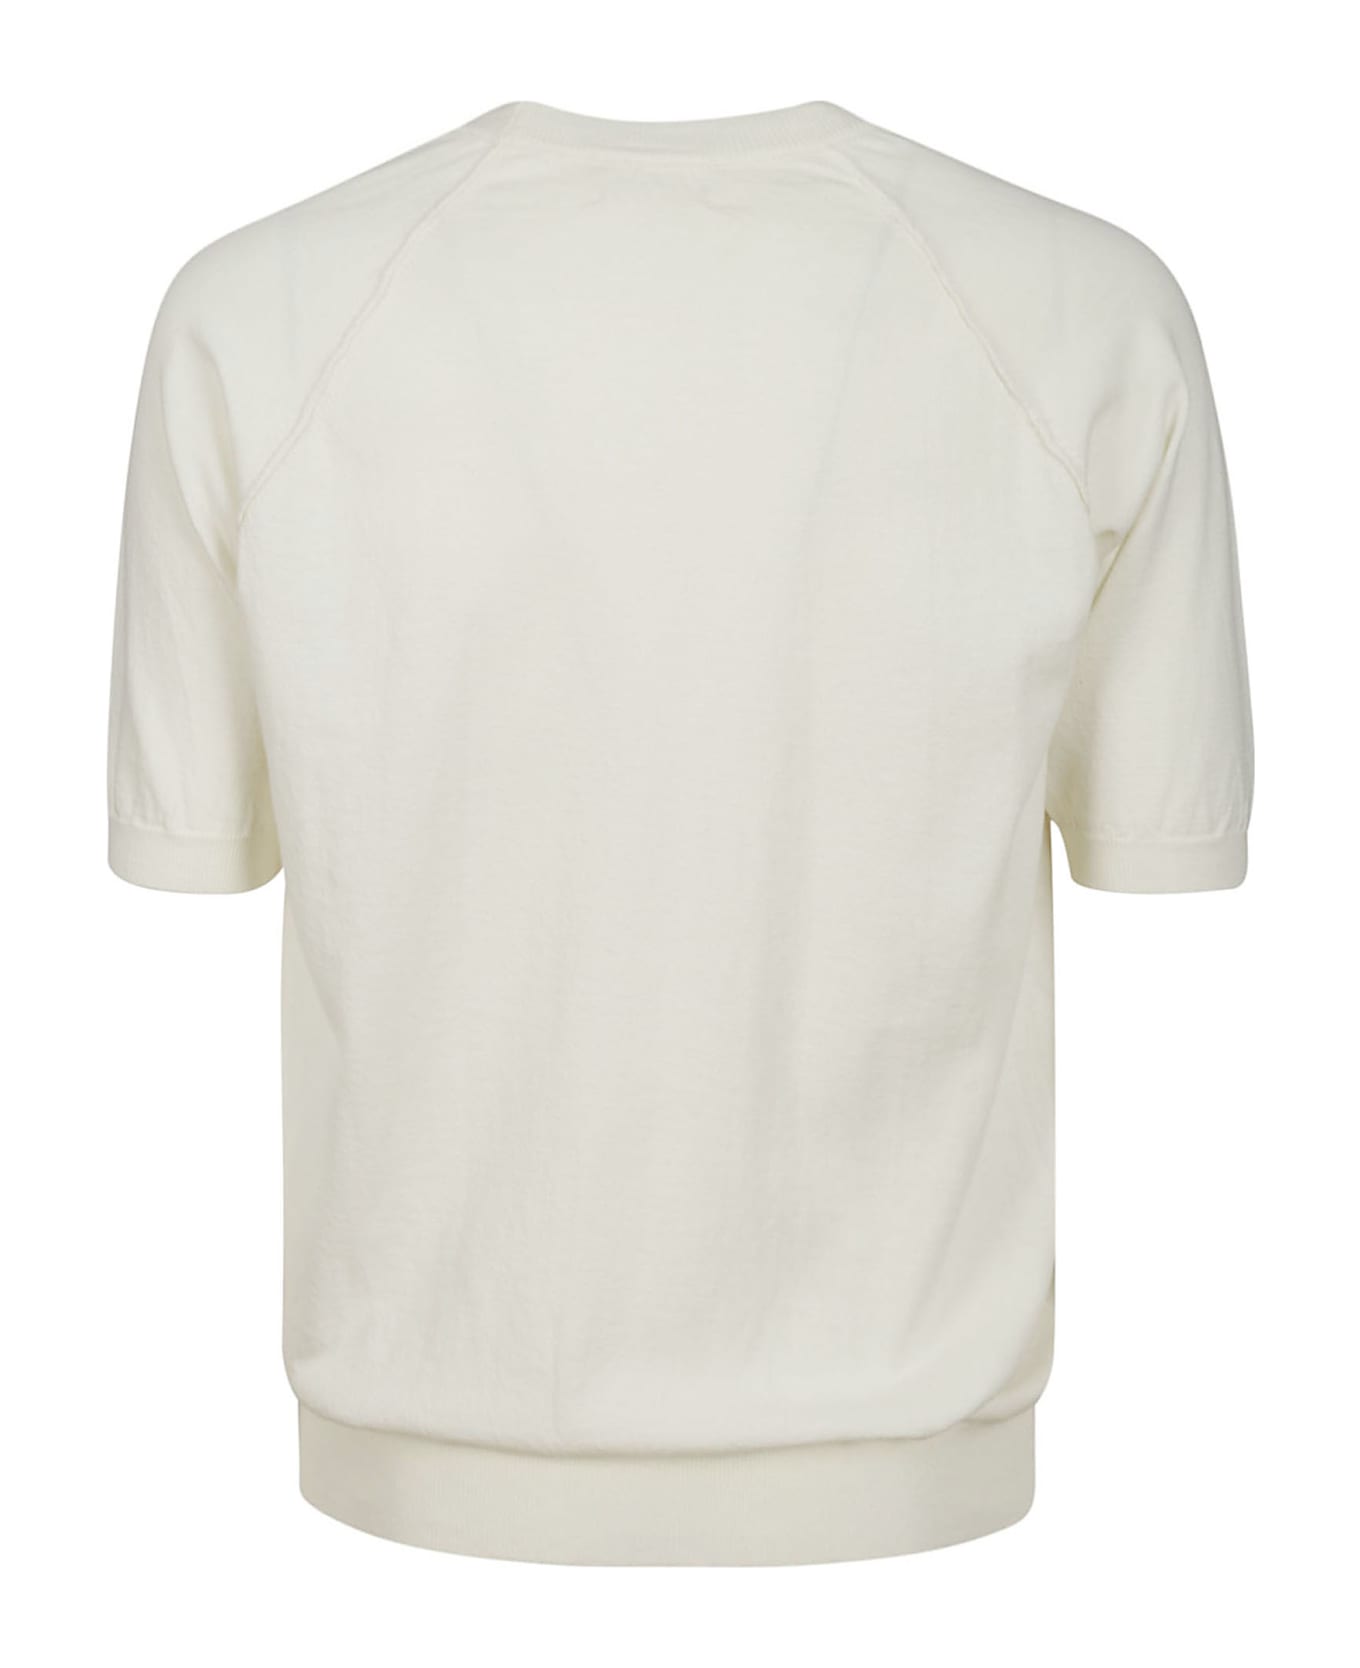 Atomo Factory T-shirt Cotone Crepe - White